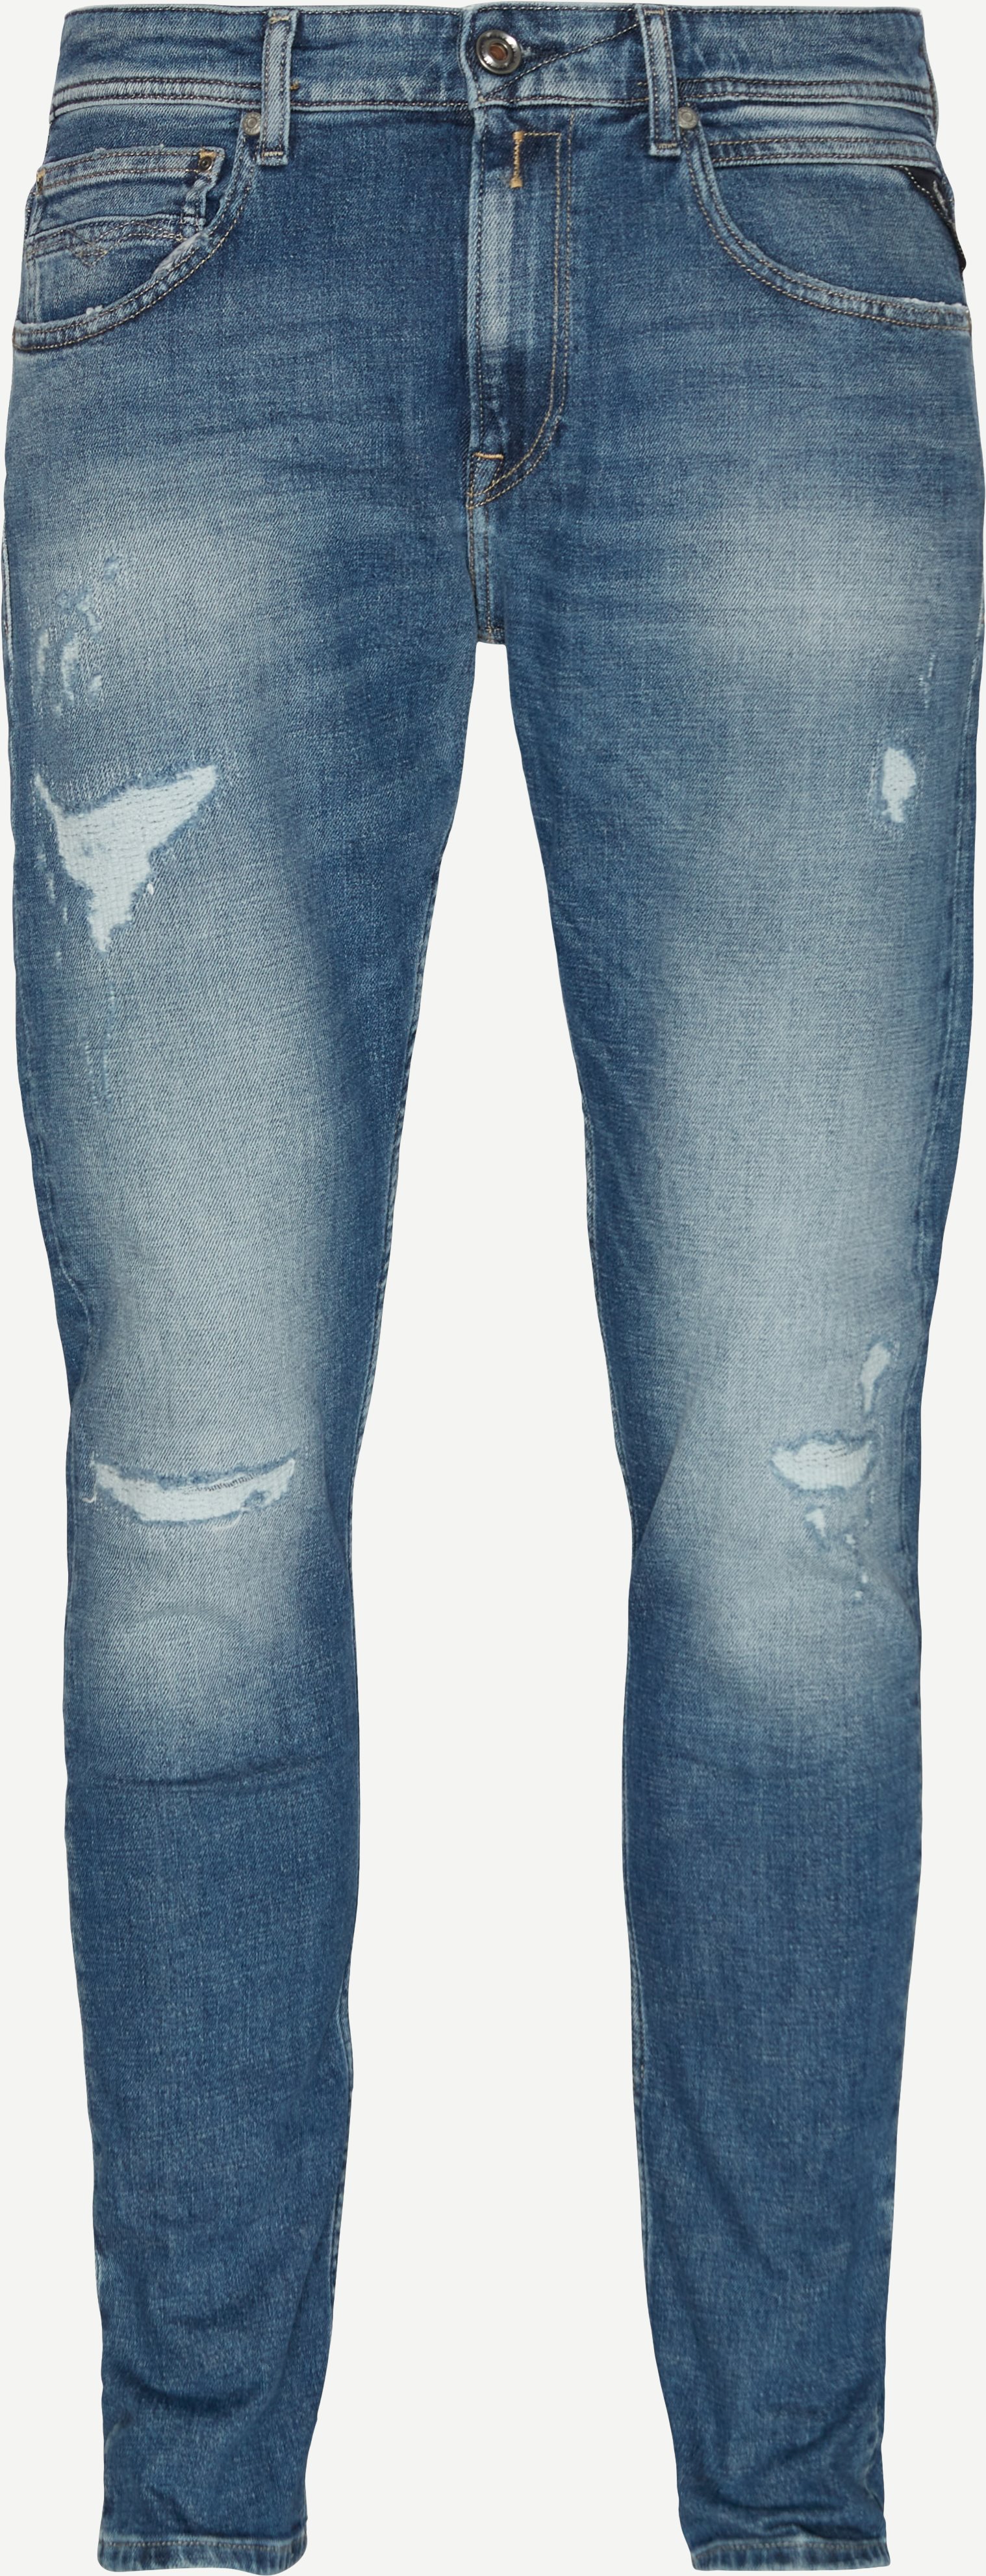 499 98R Broken Edge Johnfrus Jeans - Jeans - Skinny fit - Denim